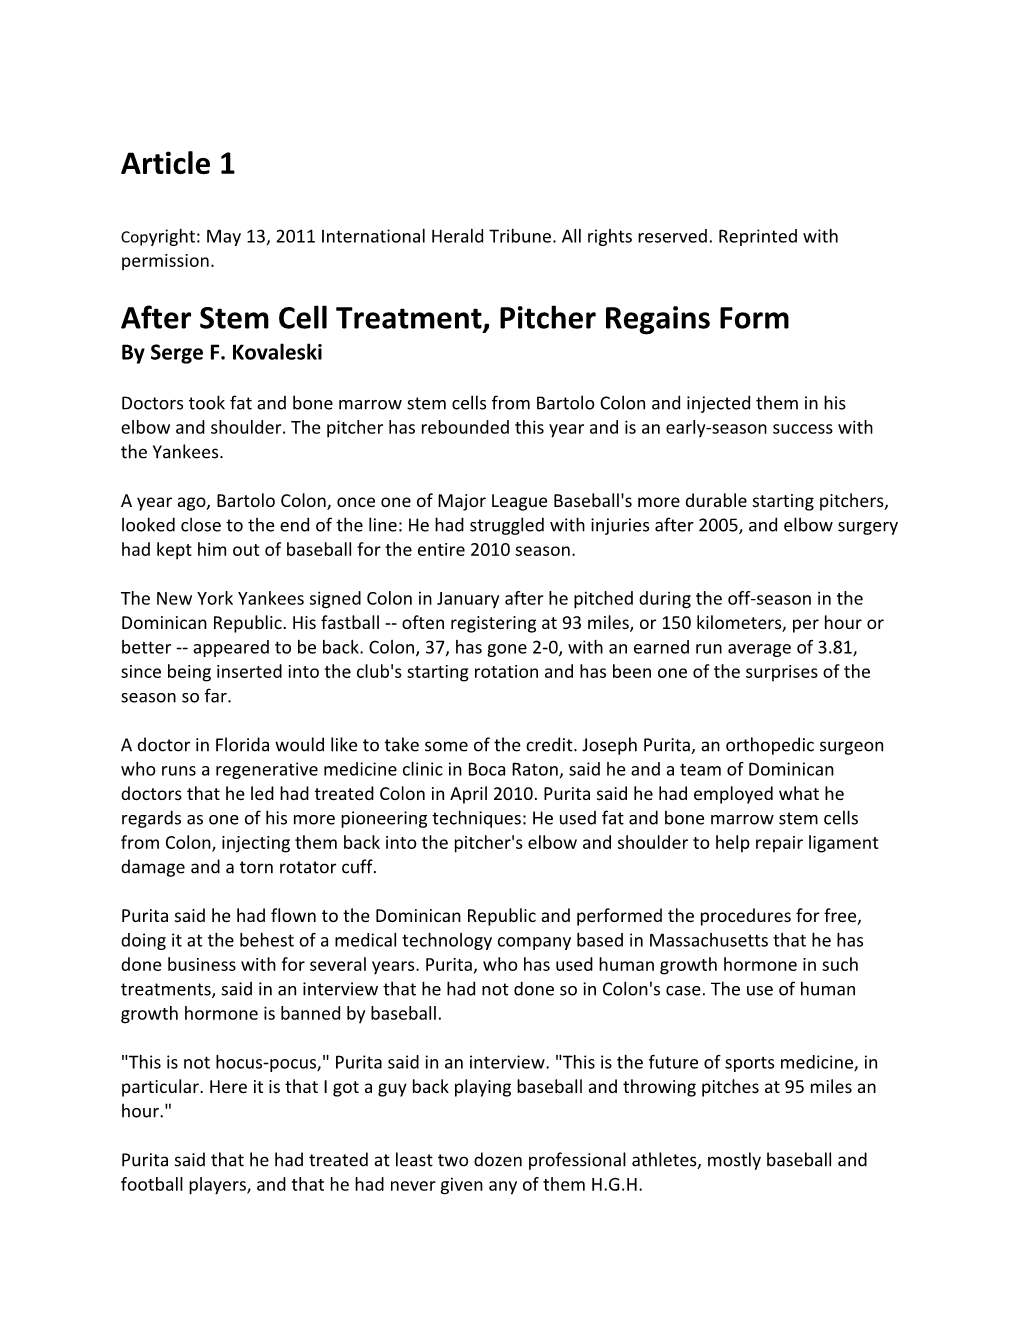 After Stem Cell Treatment, Pitcher Regains Form